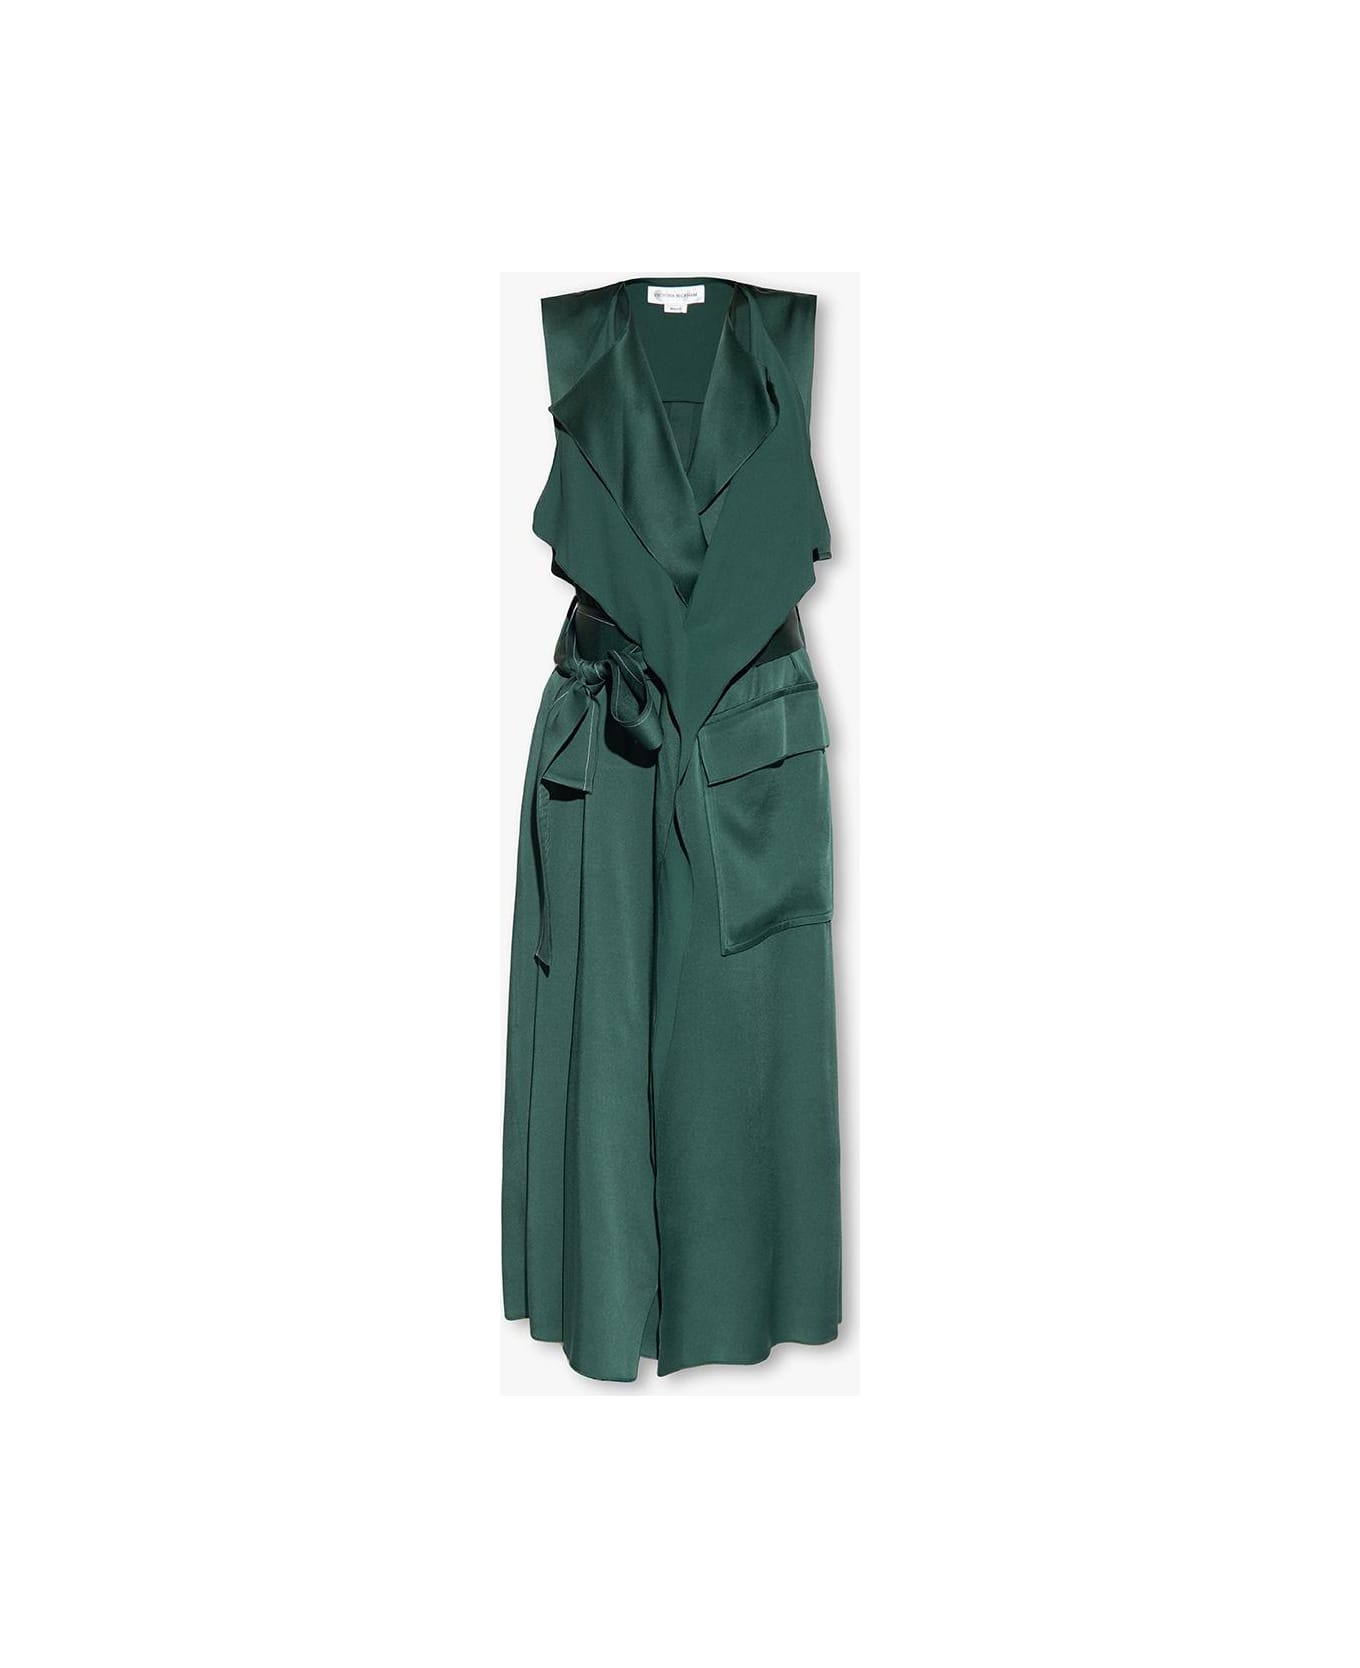 Victoria Beckham Belted Dress - Bottle Green